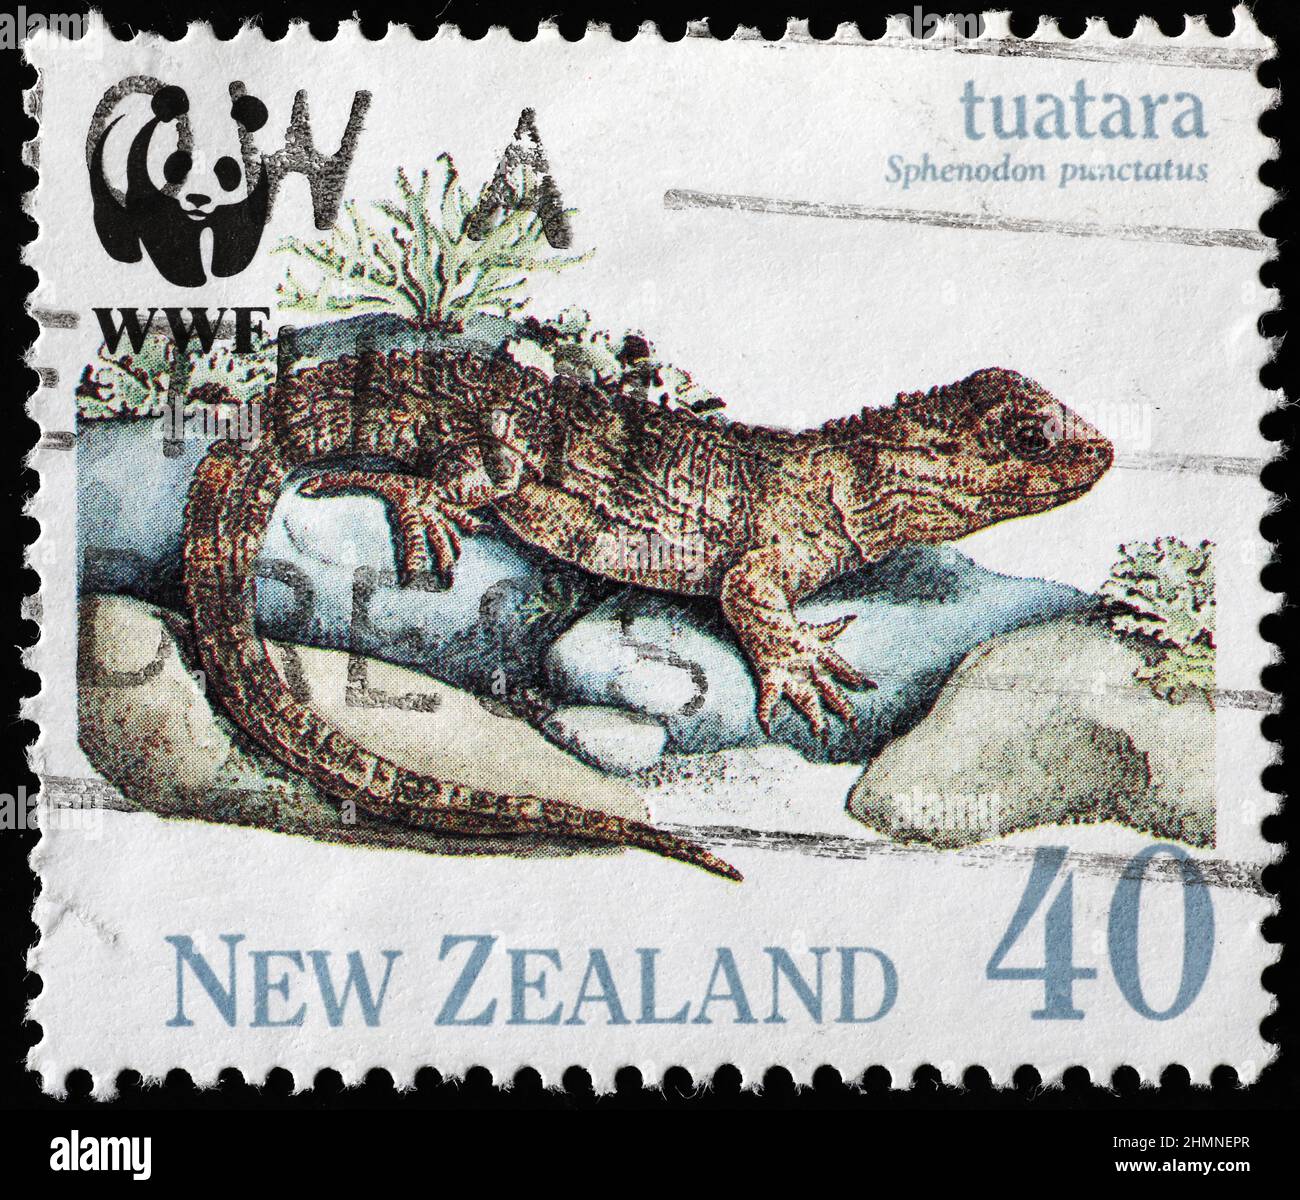 Lizard Tuatara on New Zealand postage stamp Stock Photo